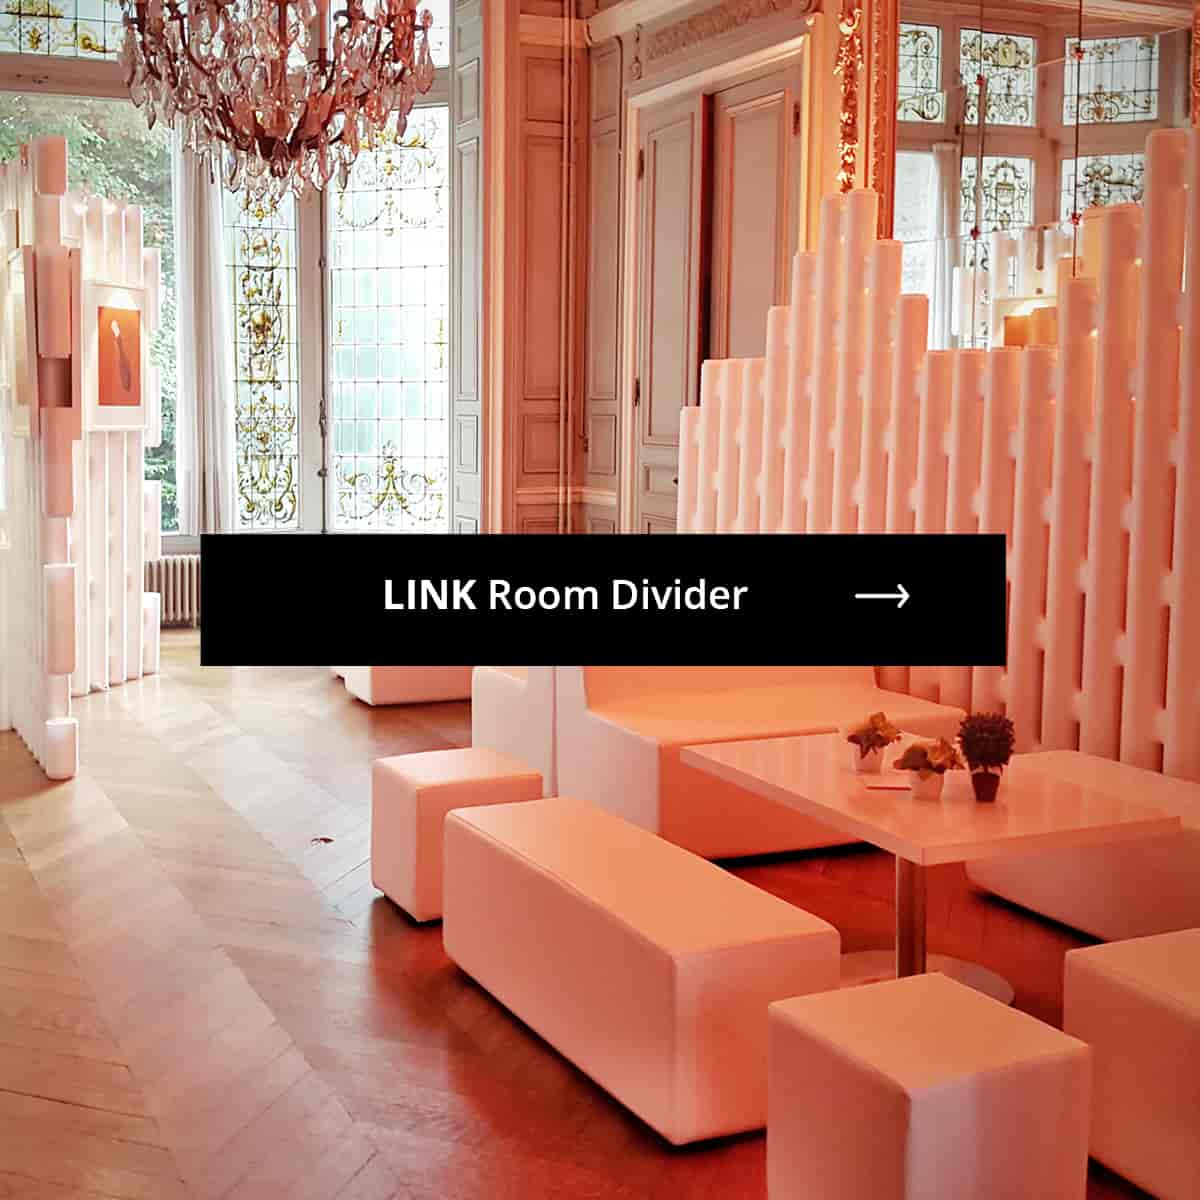 LINK room divider partition divider wall